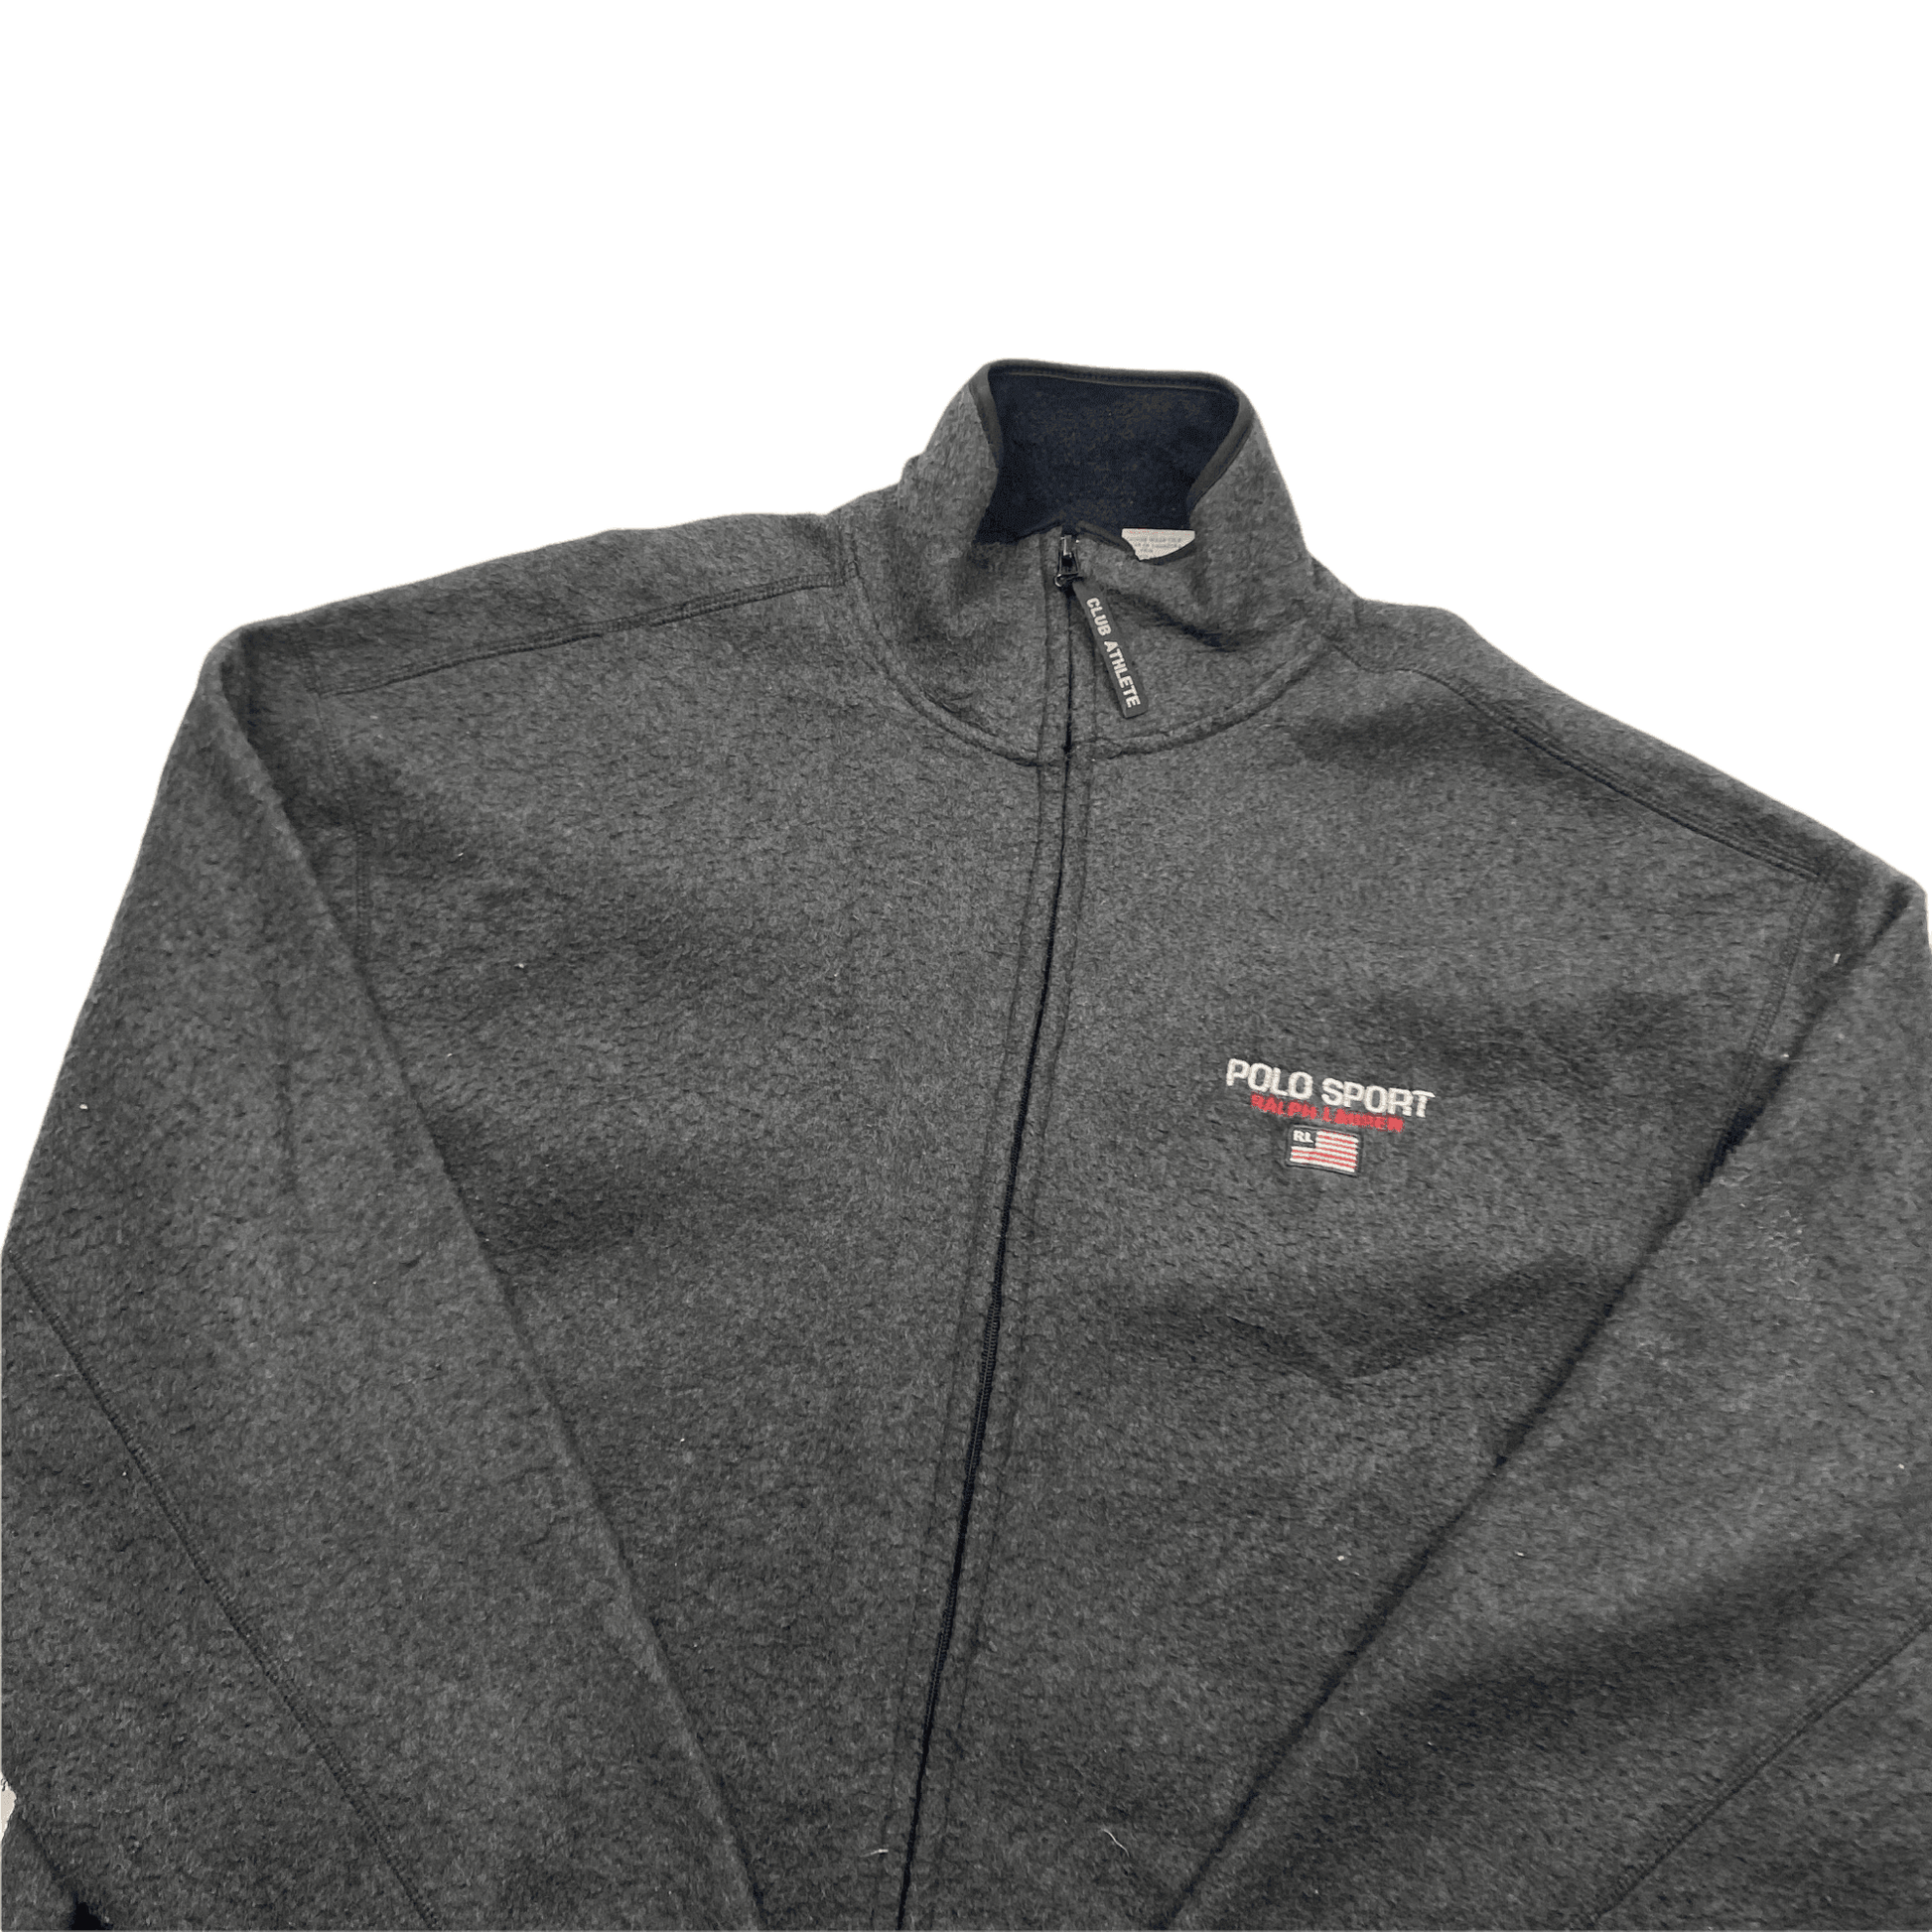 Vintage 90s Grey Ralph Lauren Polo Sport Spell-Out Full Zip Fleece - Extra Large - The Streetwear Studio